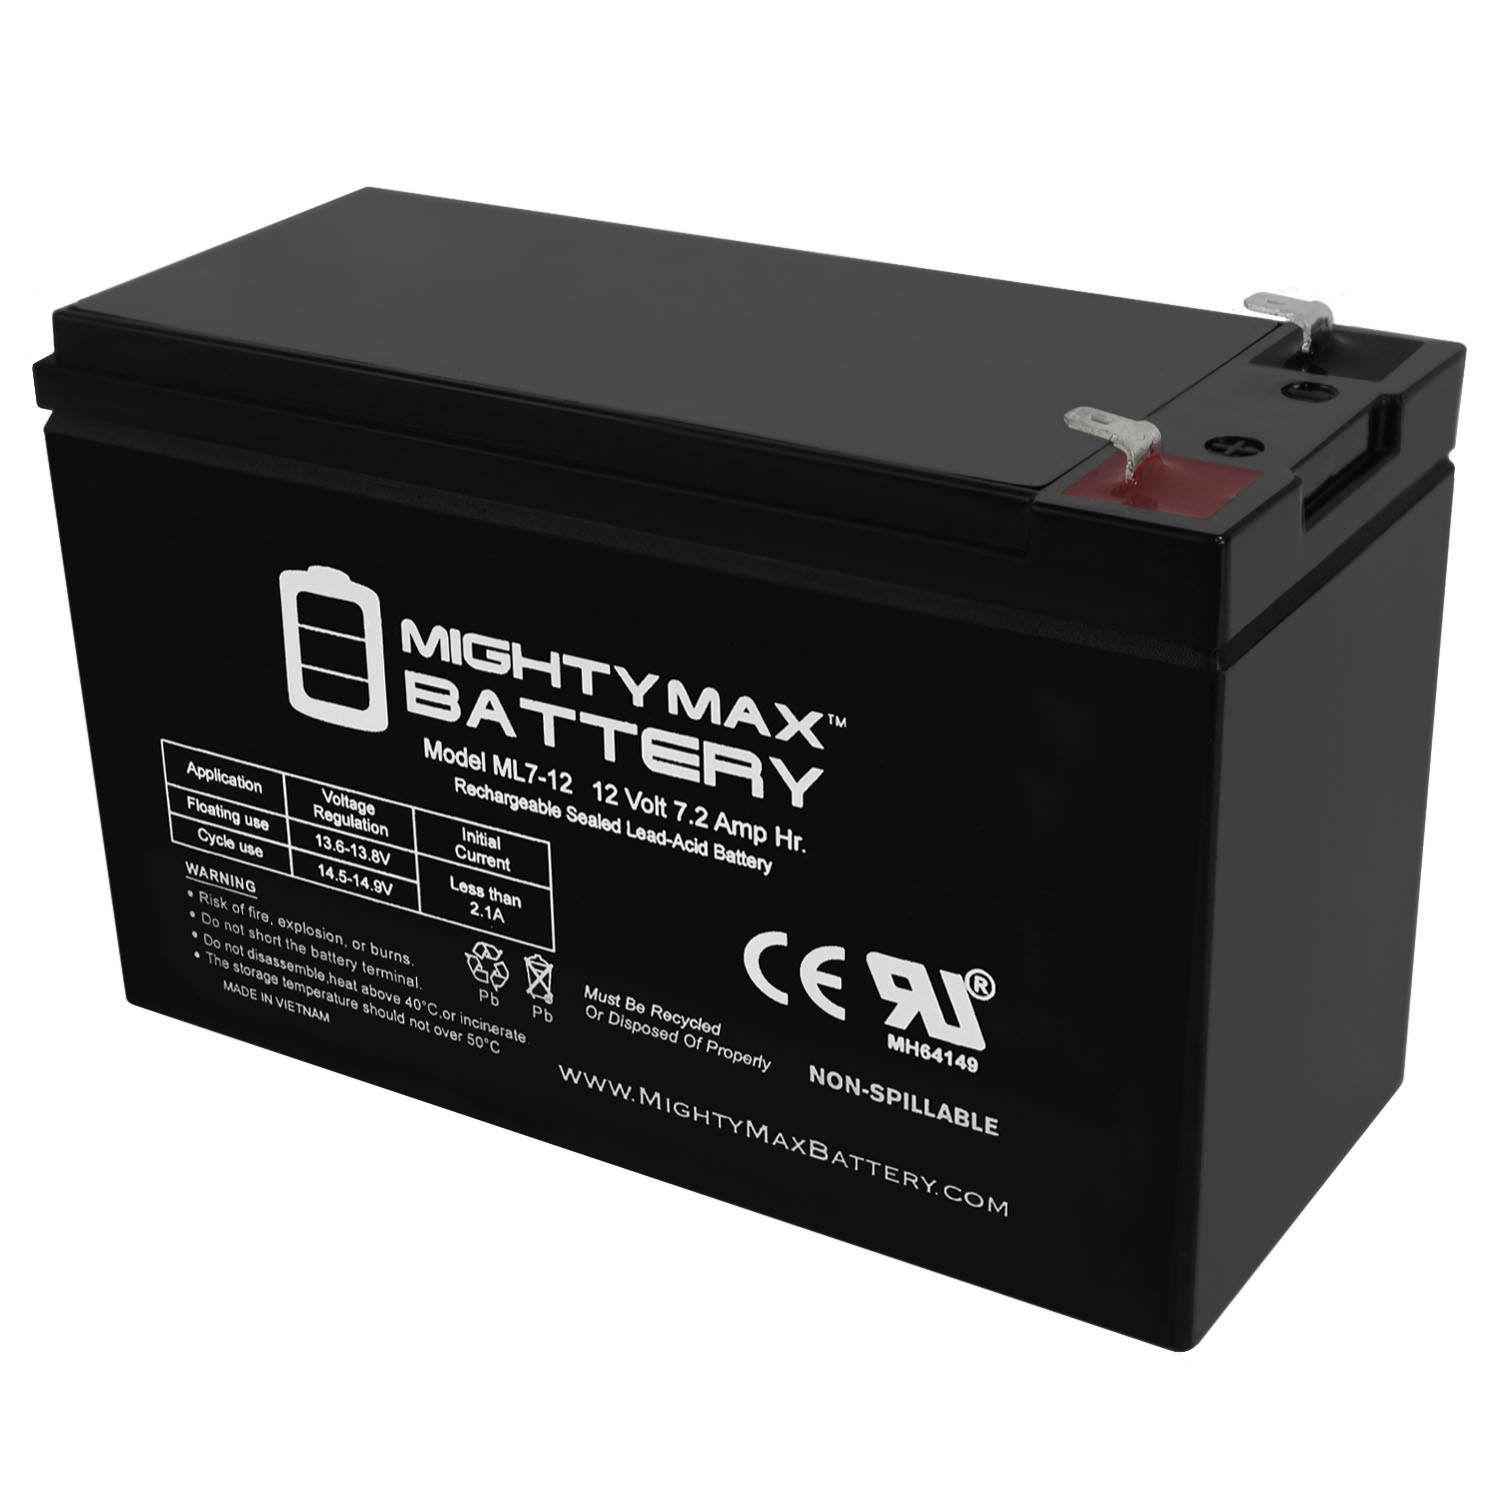 ML7-12 - 12V 7.2AH Replacement Battery for APC APC3TA